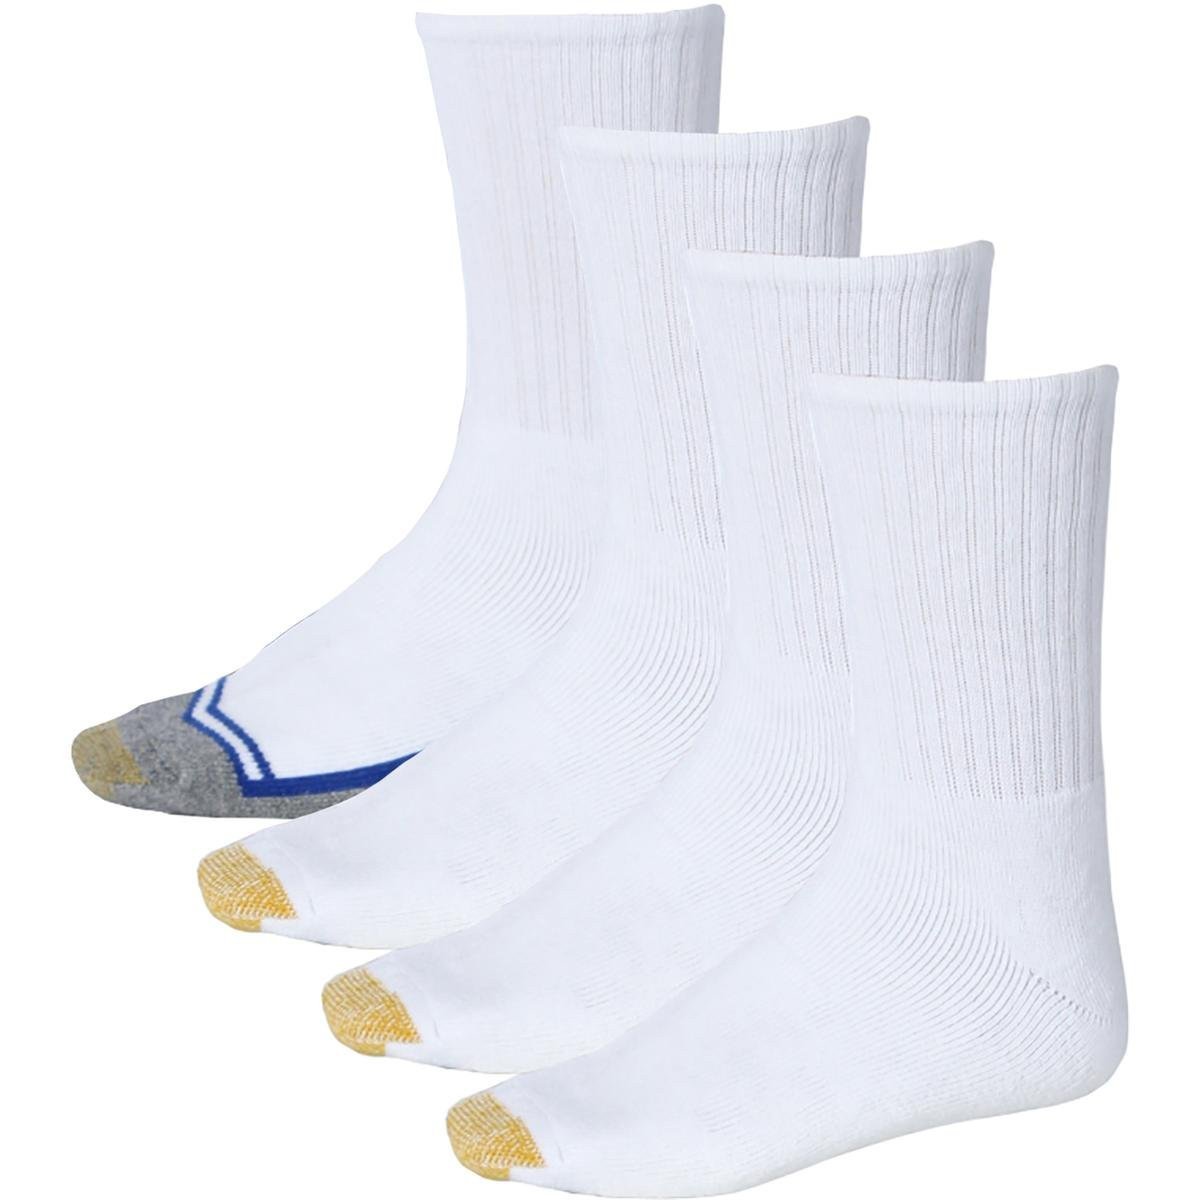 This Gold Toe Crew Socks 4 Pack